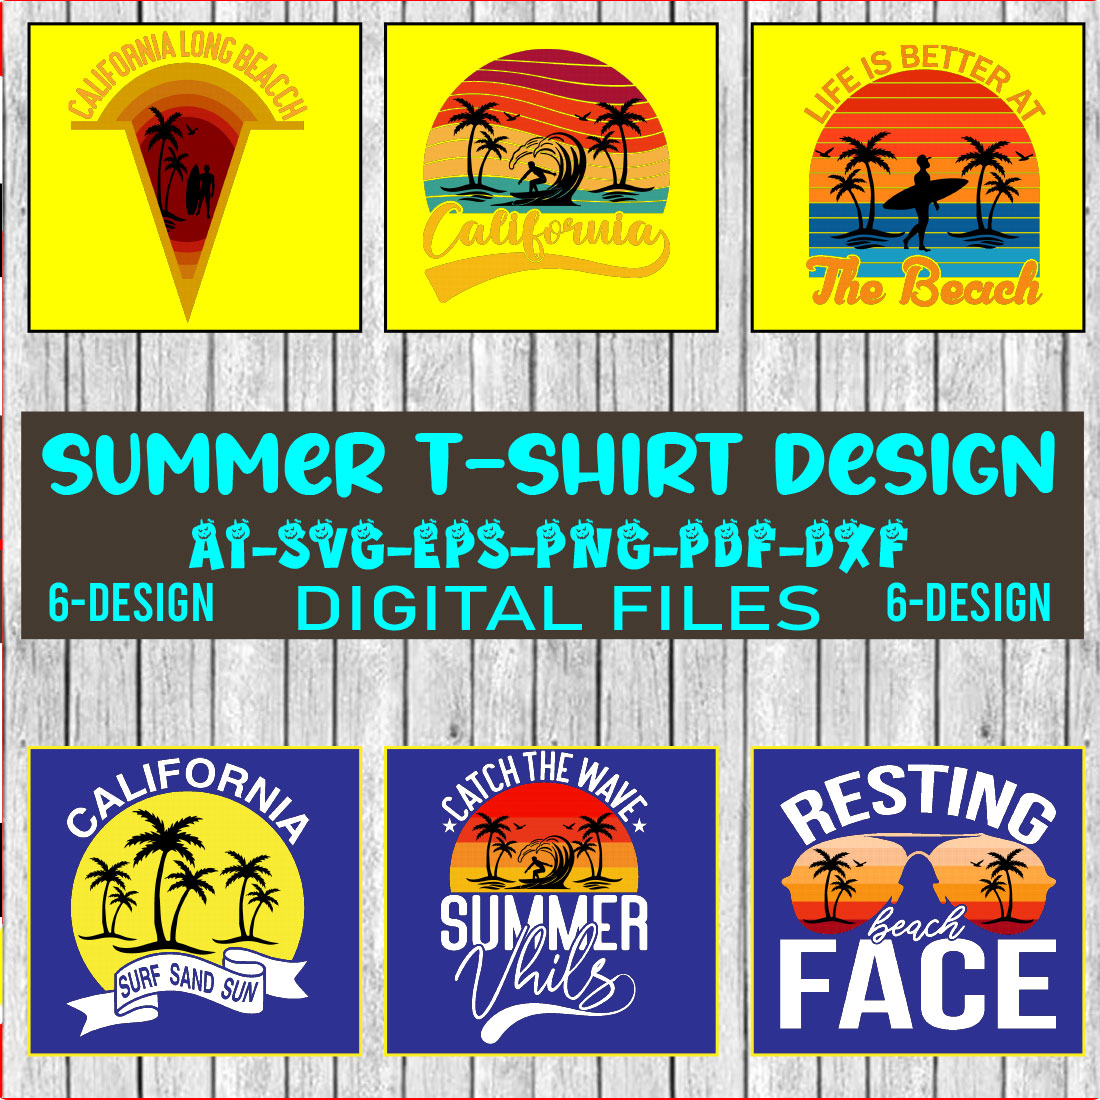 Summer T-shirt Design Vol-05 cover image.